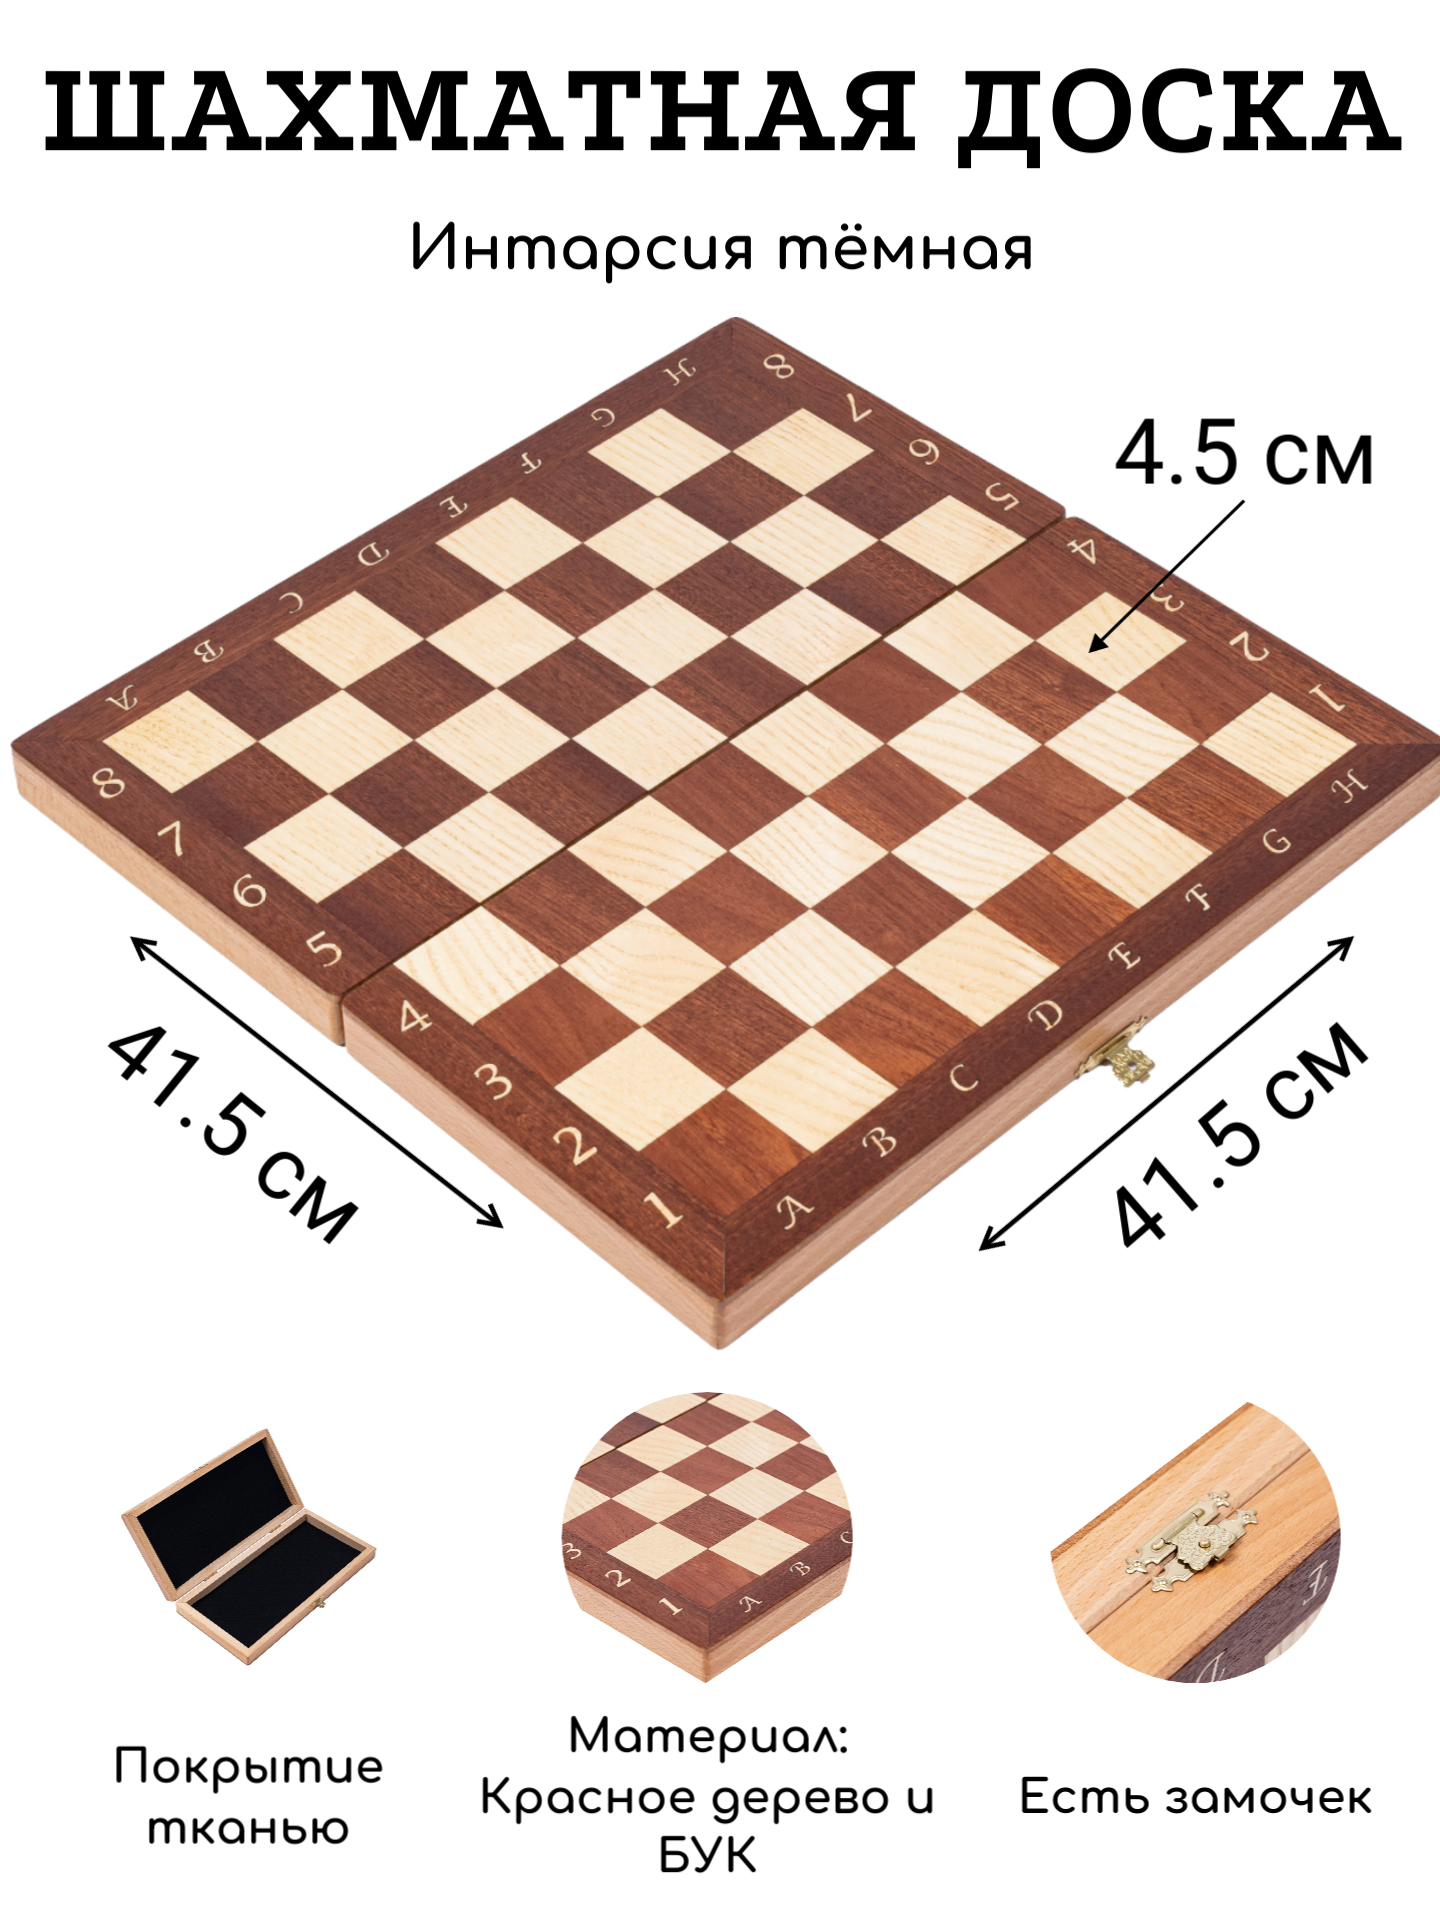 Шахматная доска без фигур Lavochkashop Турнирная 41 5 см интарсия stav041 шахматная доска 30 х 30 х 1 5 см пластик